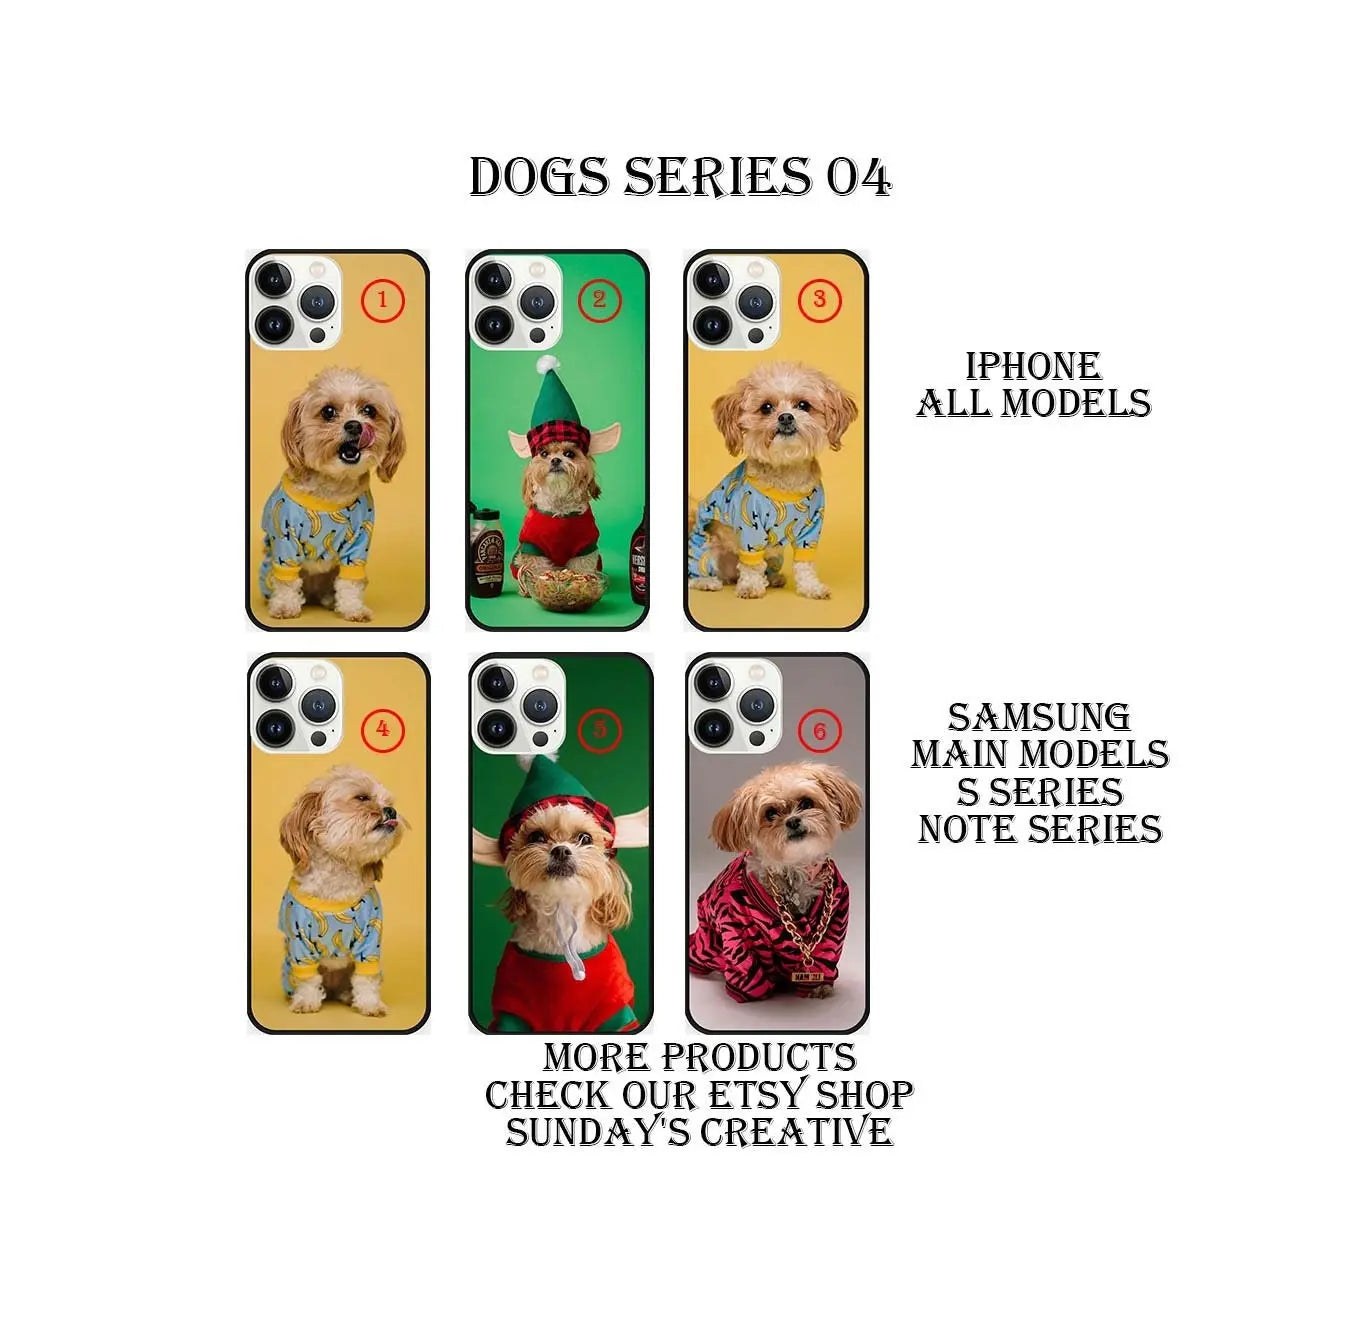 Designed phone cases  Dog series 04 Sunday's Creative